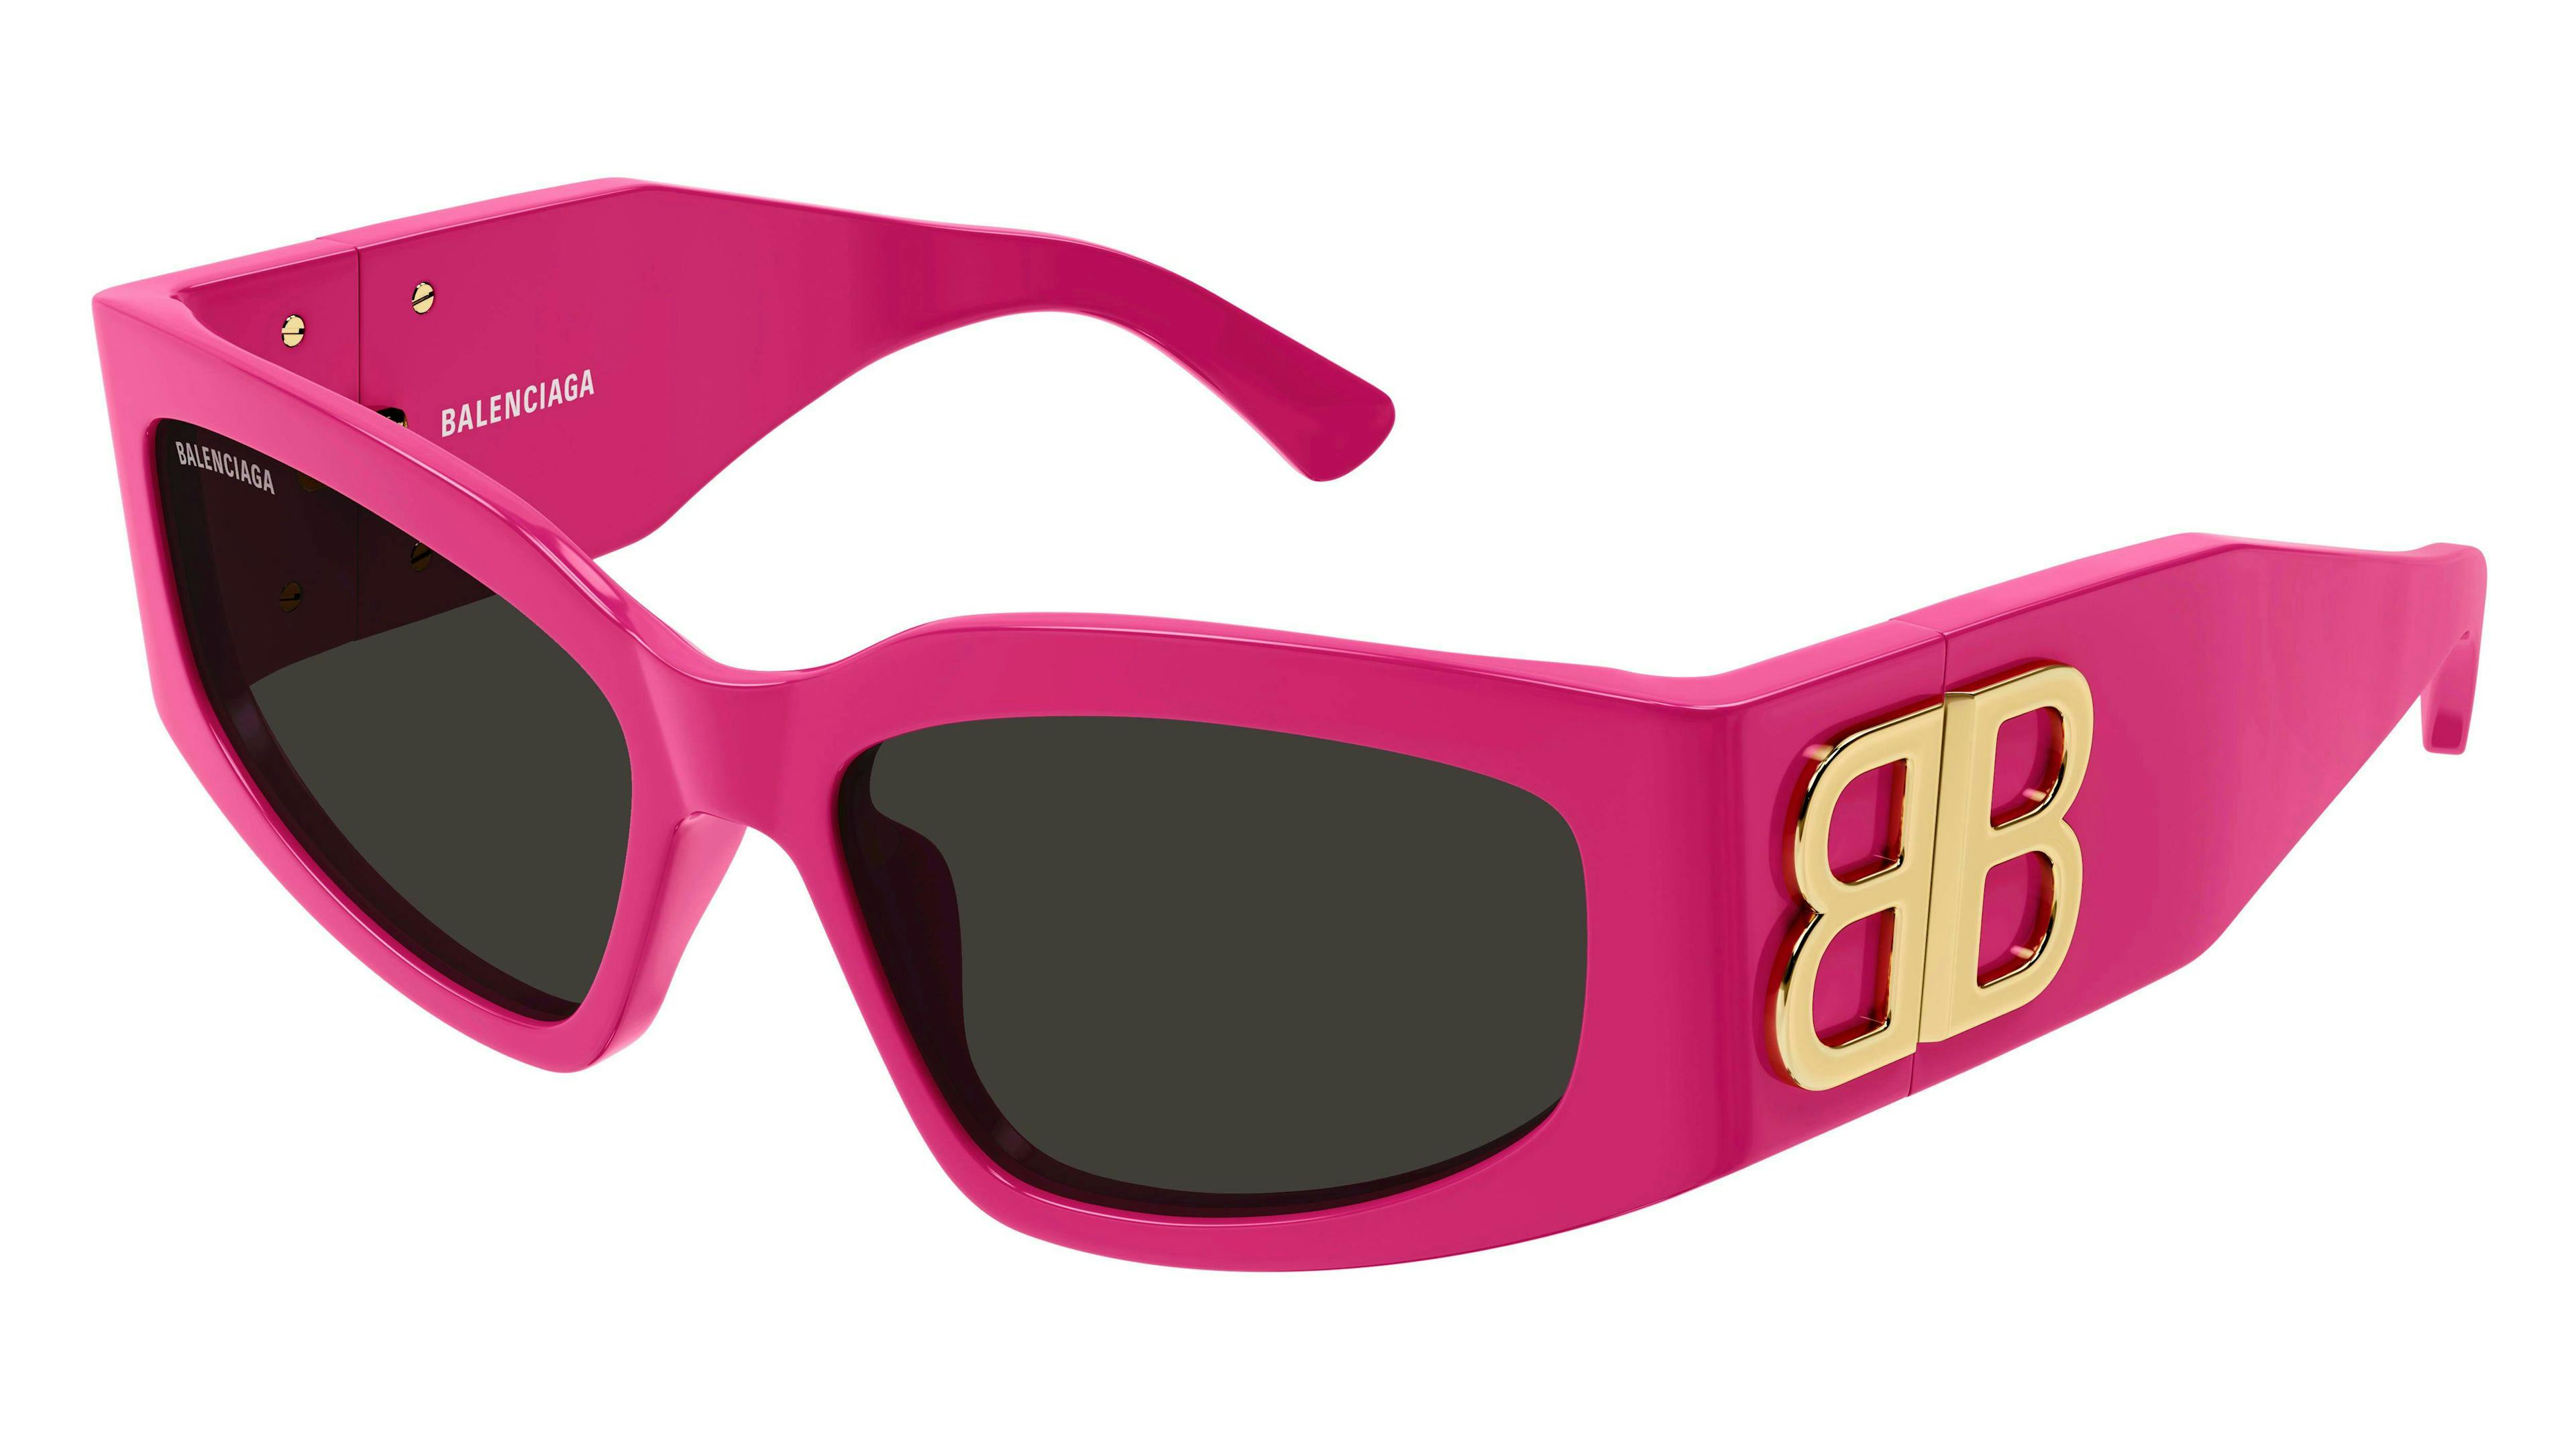 accessories sunglasses glasses